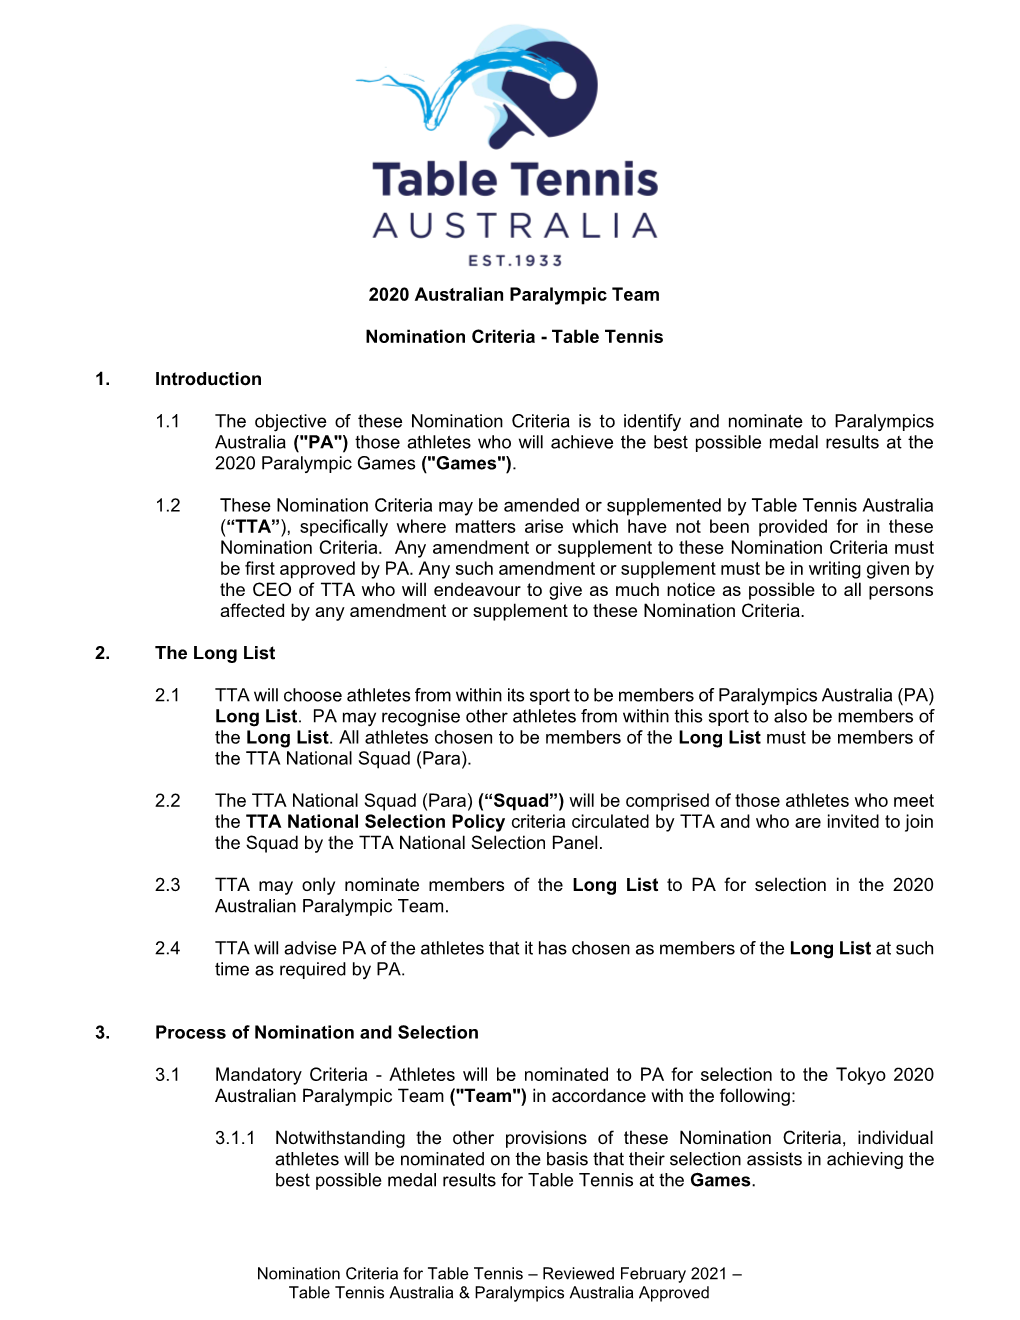 Para-Table Tennis Nomination Criteria